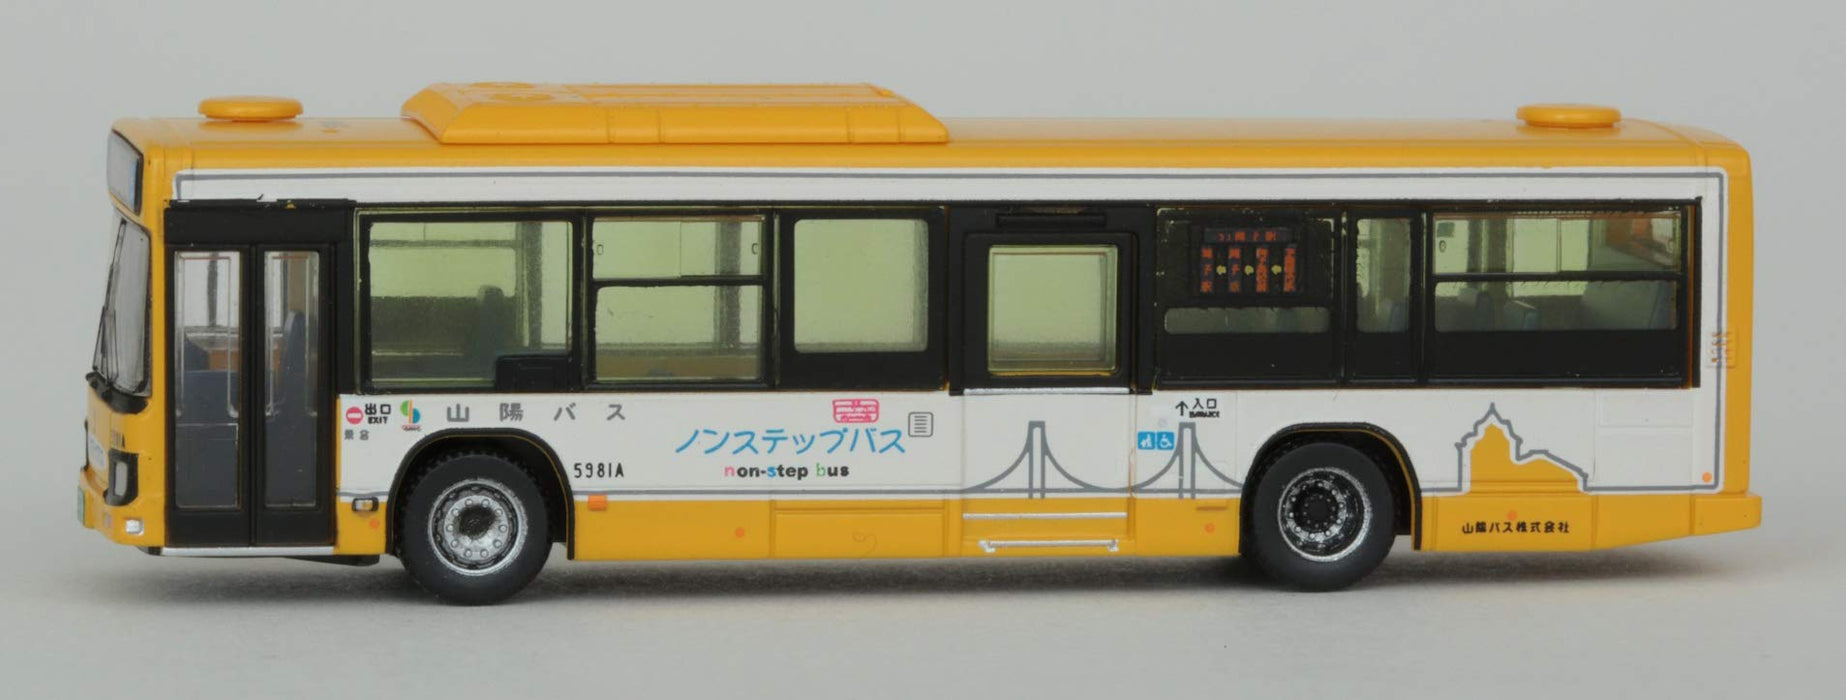 Tomytec National Bus Collection JB074 Sanyo Bus Diorama, limitierte Erstausgabe